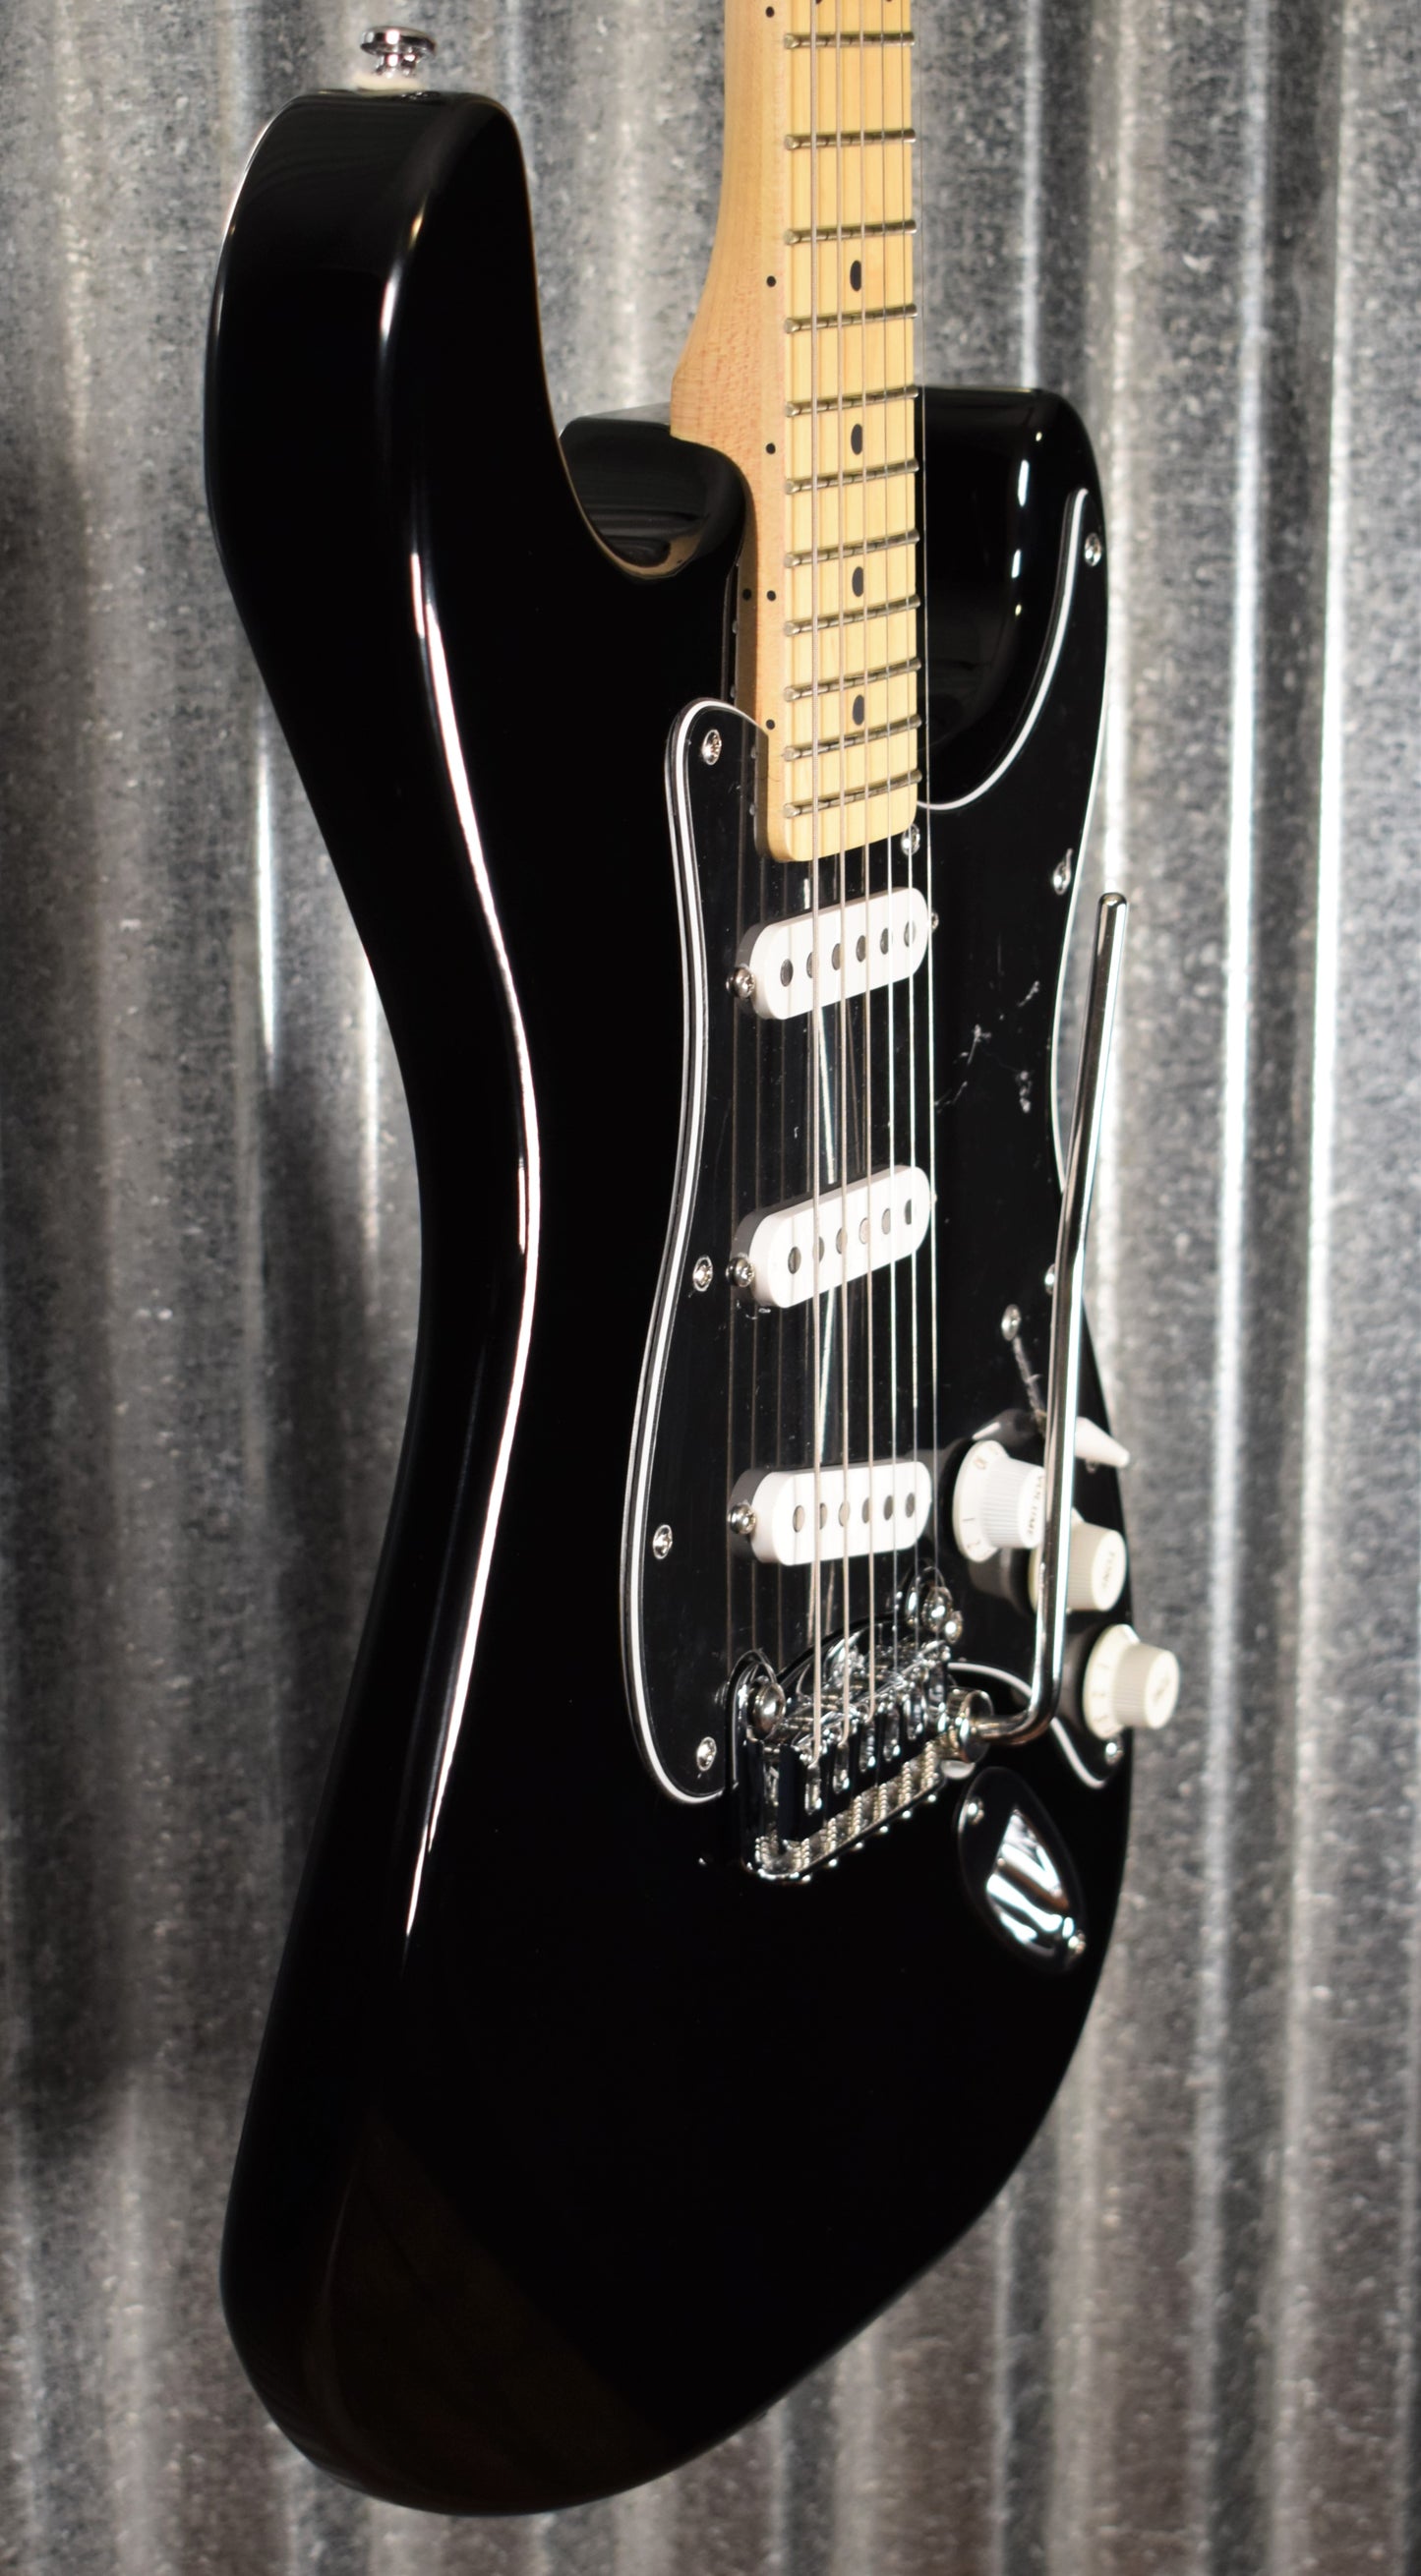 G&L Tribute Legacy Poplar Gloss Black Guitar #3312 Demo